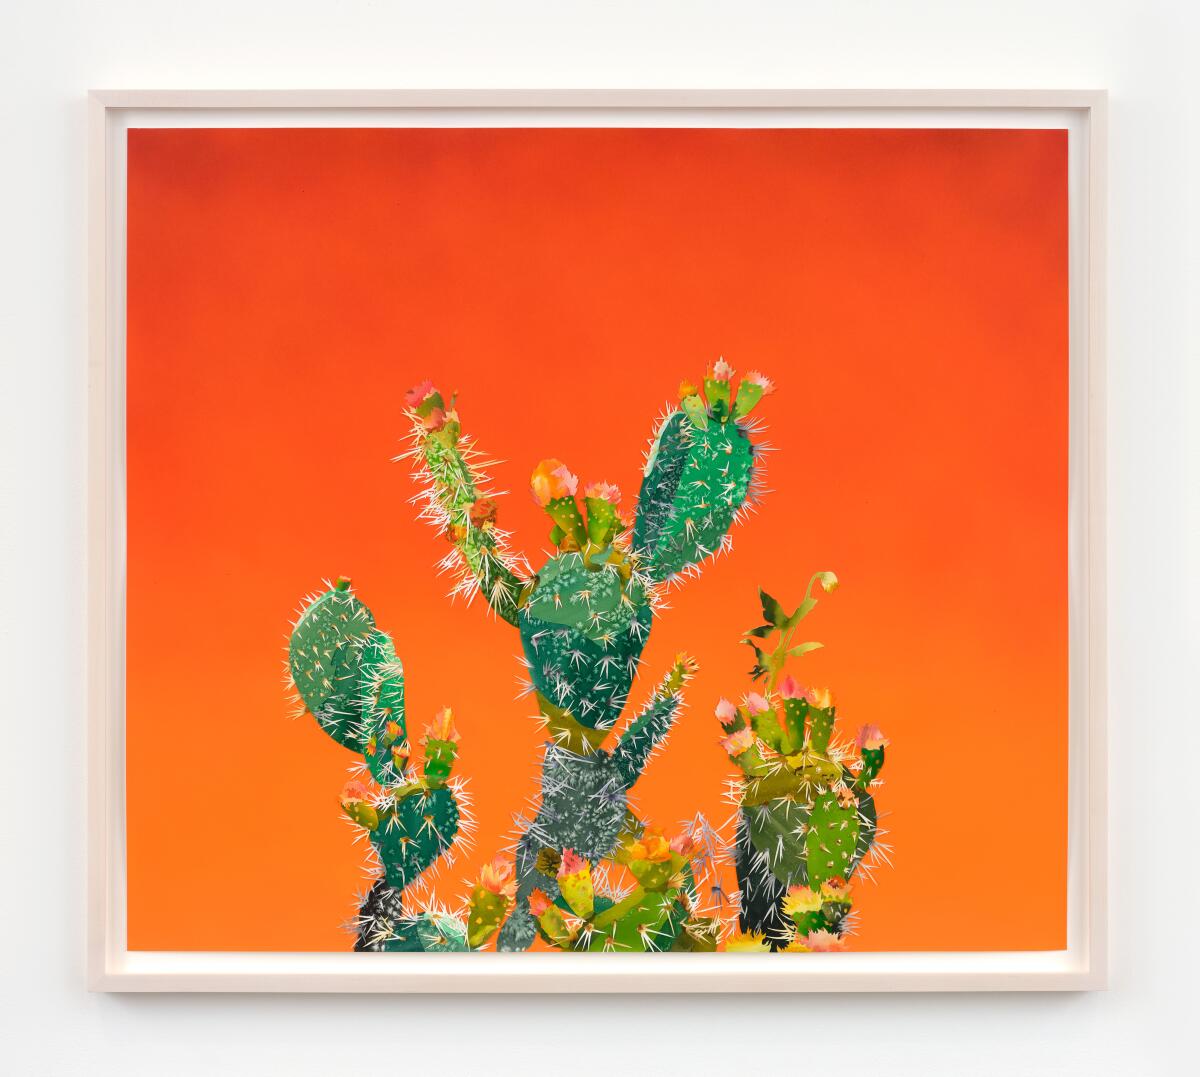 Francesca Gabbiani's art shows spiked green cactus set against a  hot orange background.